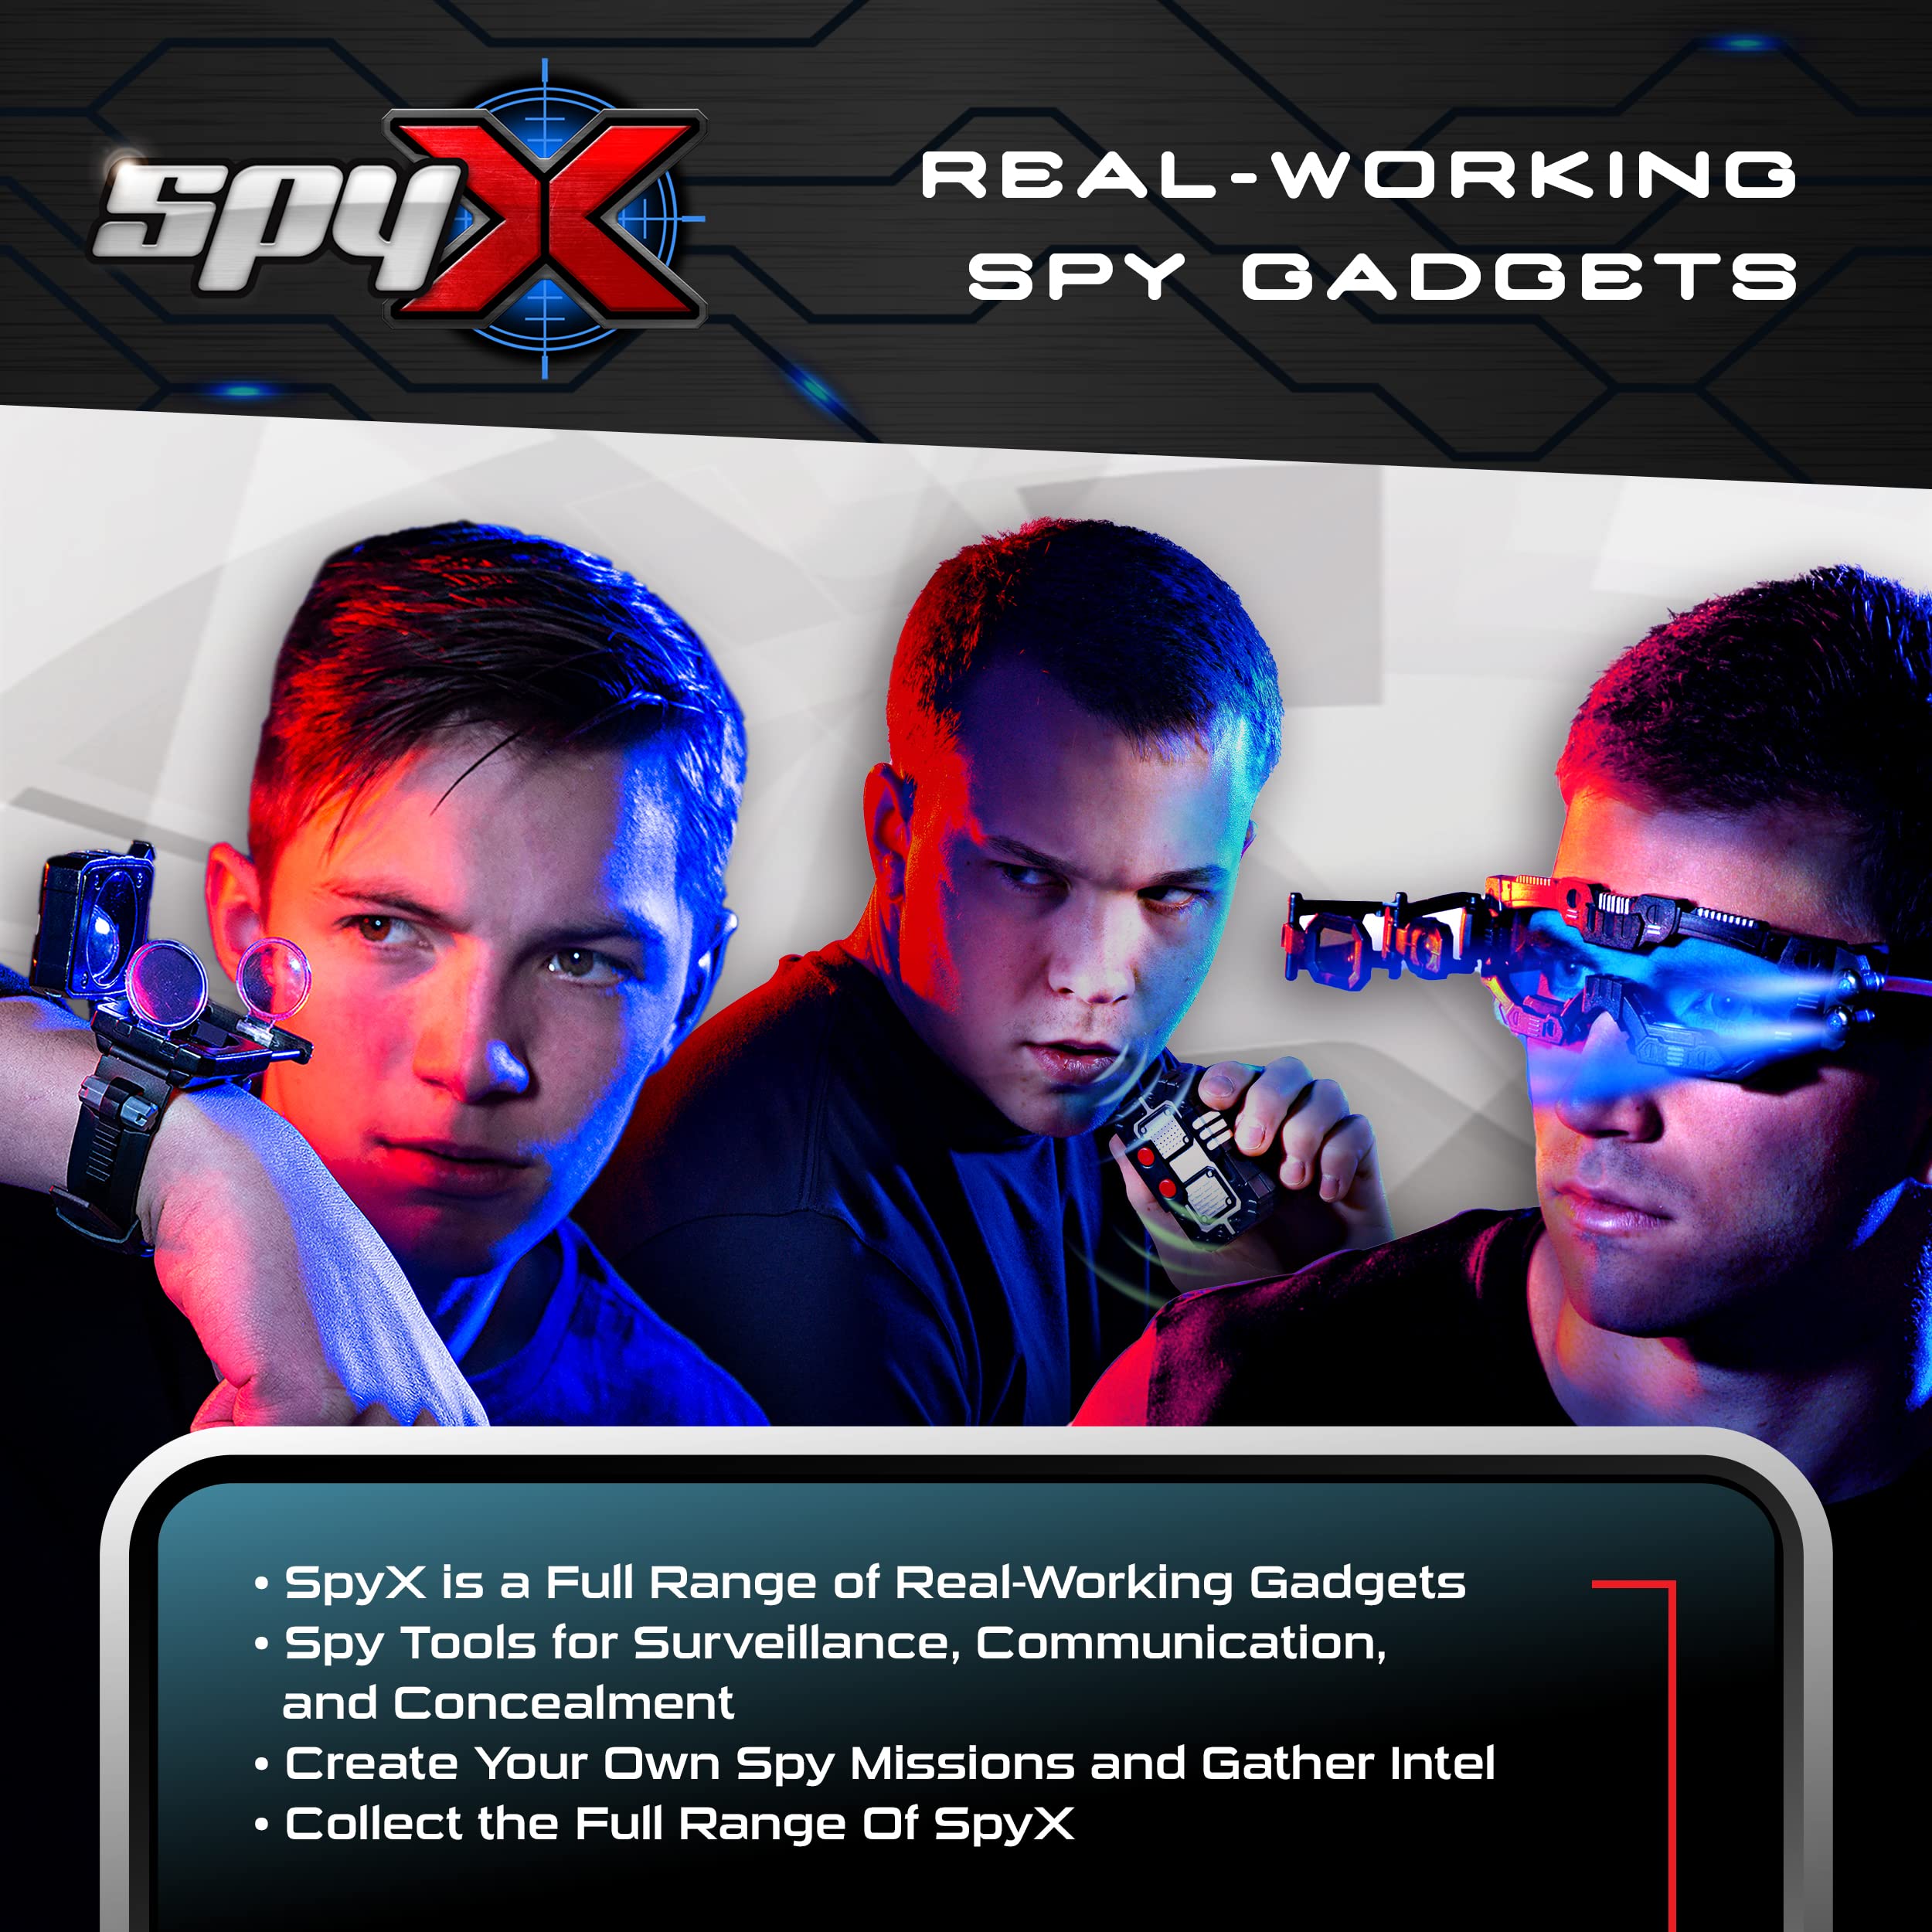 SpyX/Secret Agent Comms Kit - Includes Spy Toy Walkie-Talkie Pair/Micro Spy Scope/Invisible Ink Pen/Secret Voice Disguiser. 4 Communication & Surveillance Tools for Spy Kids